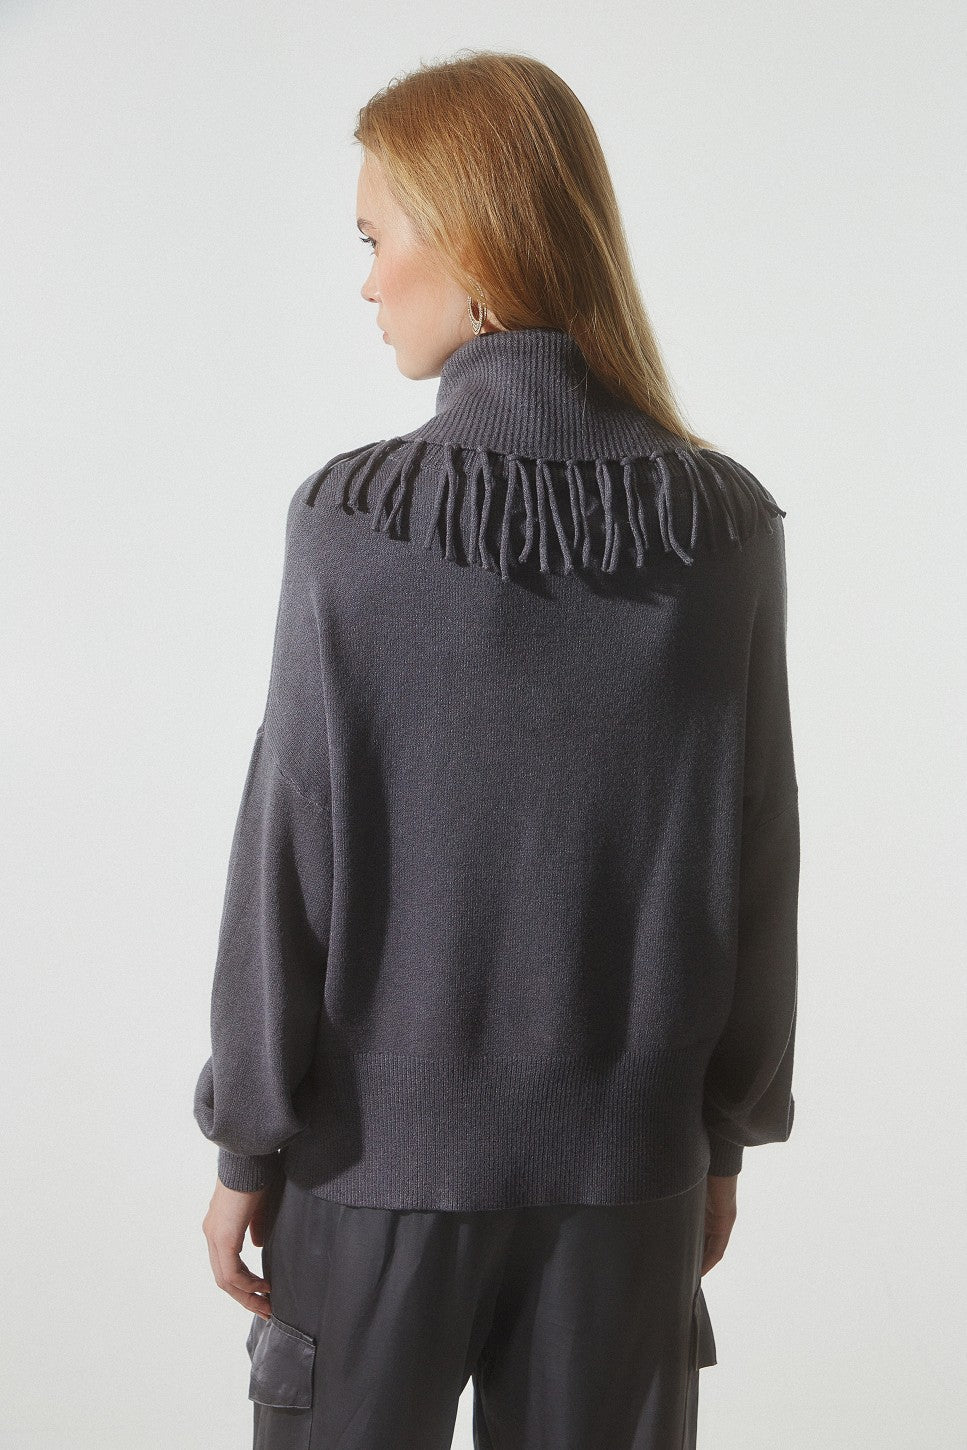 Fringed Sweater (Gray)